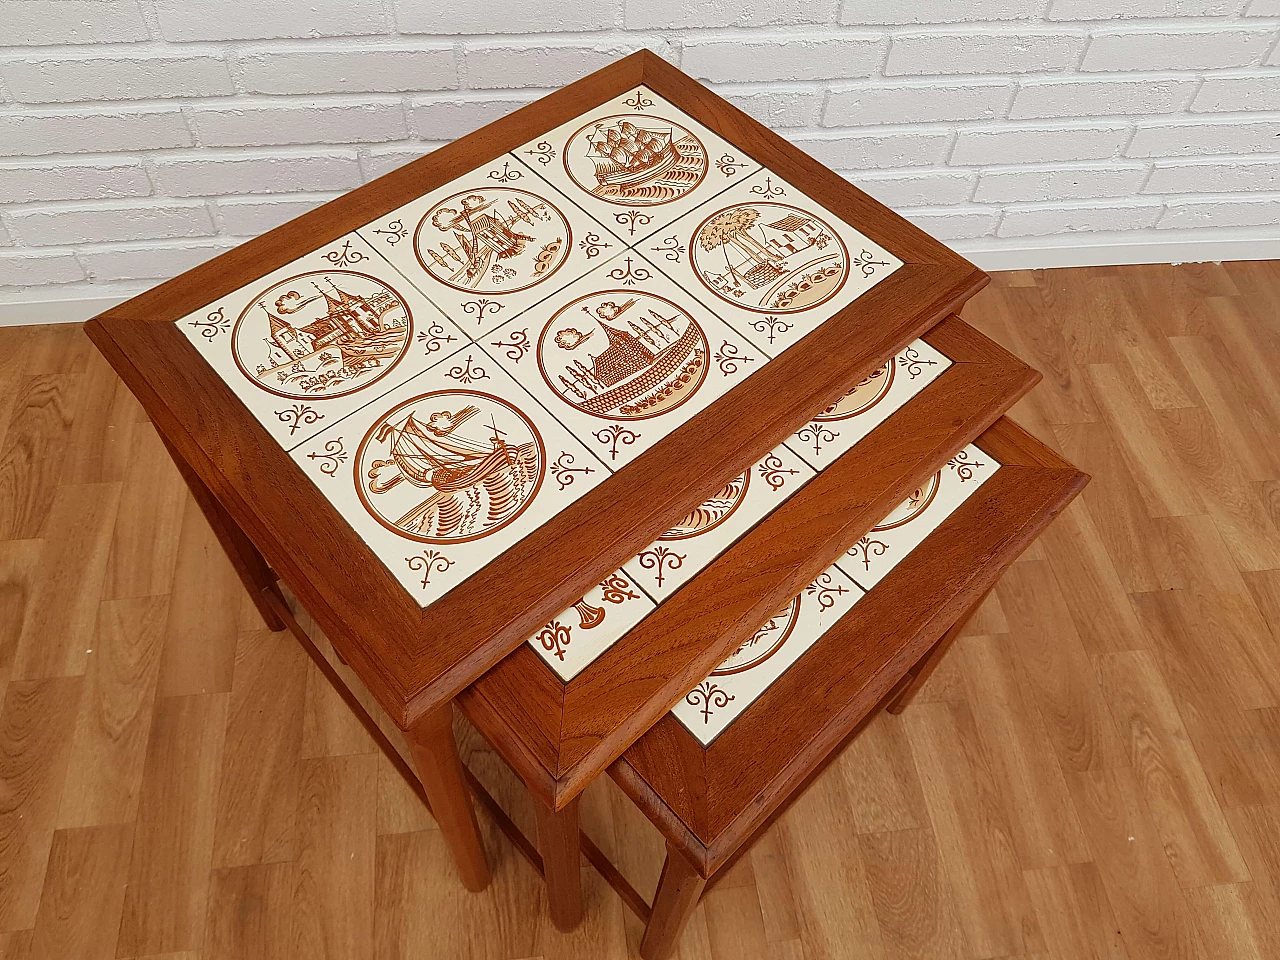 Nesting table, 60s, danish design, hand-painted ceramic tiles, teak wood 1064948